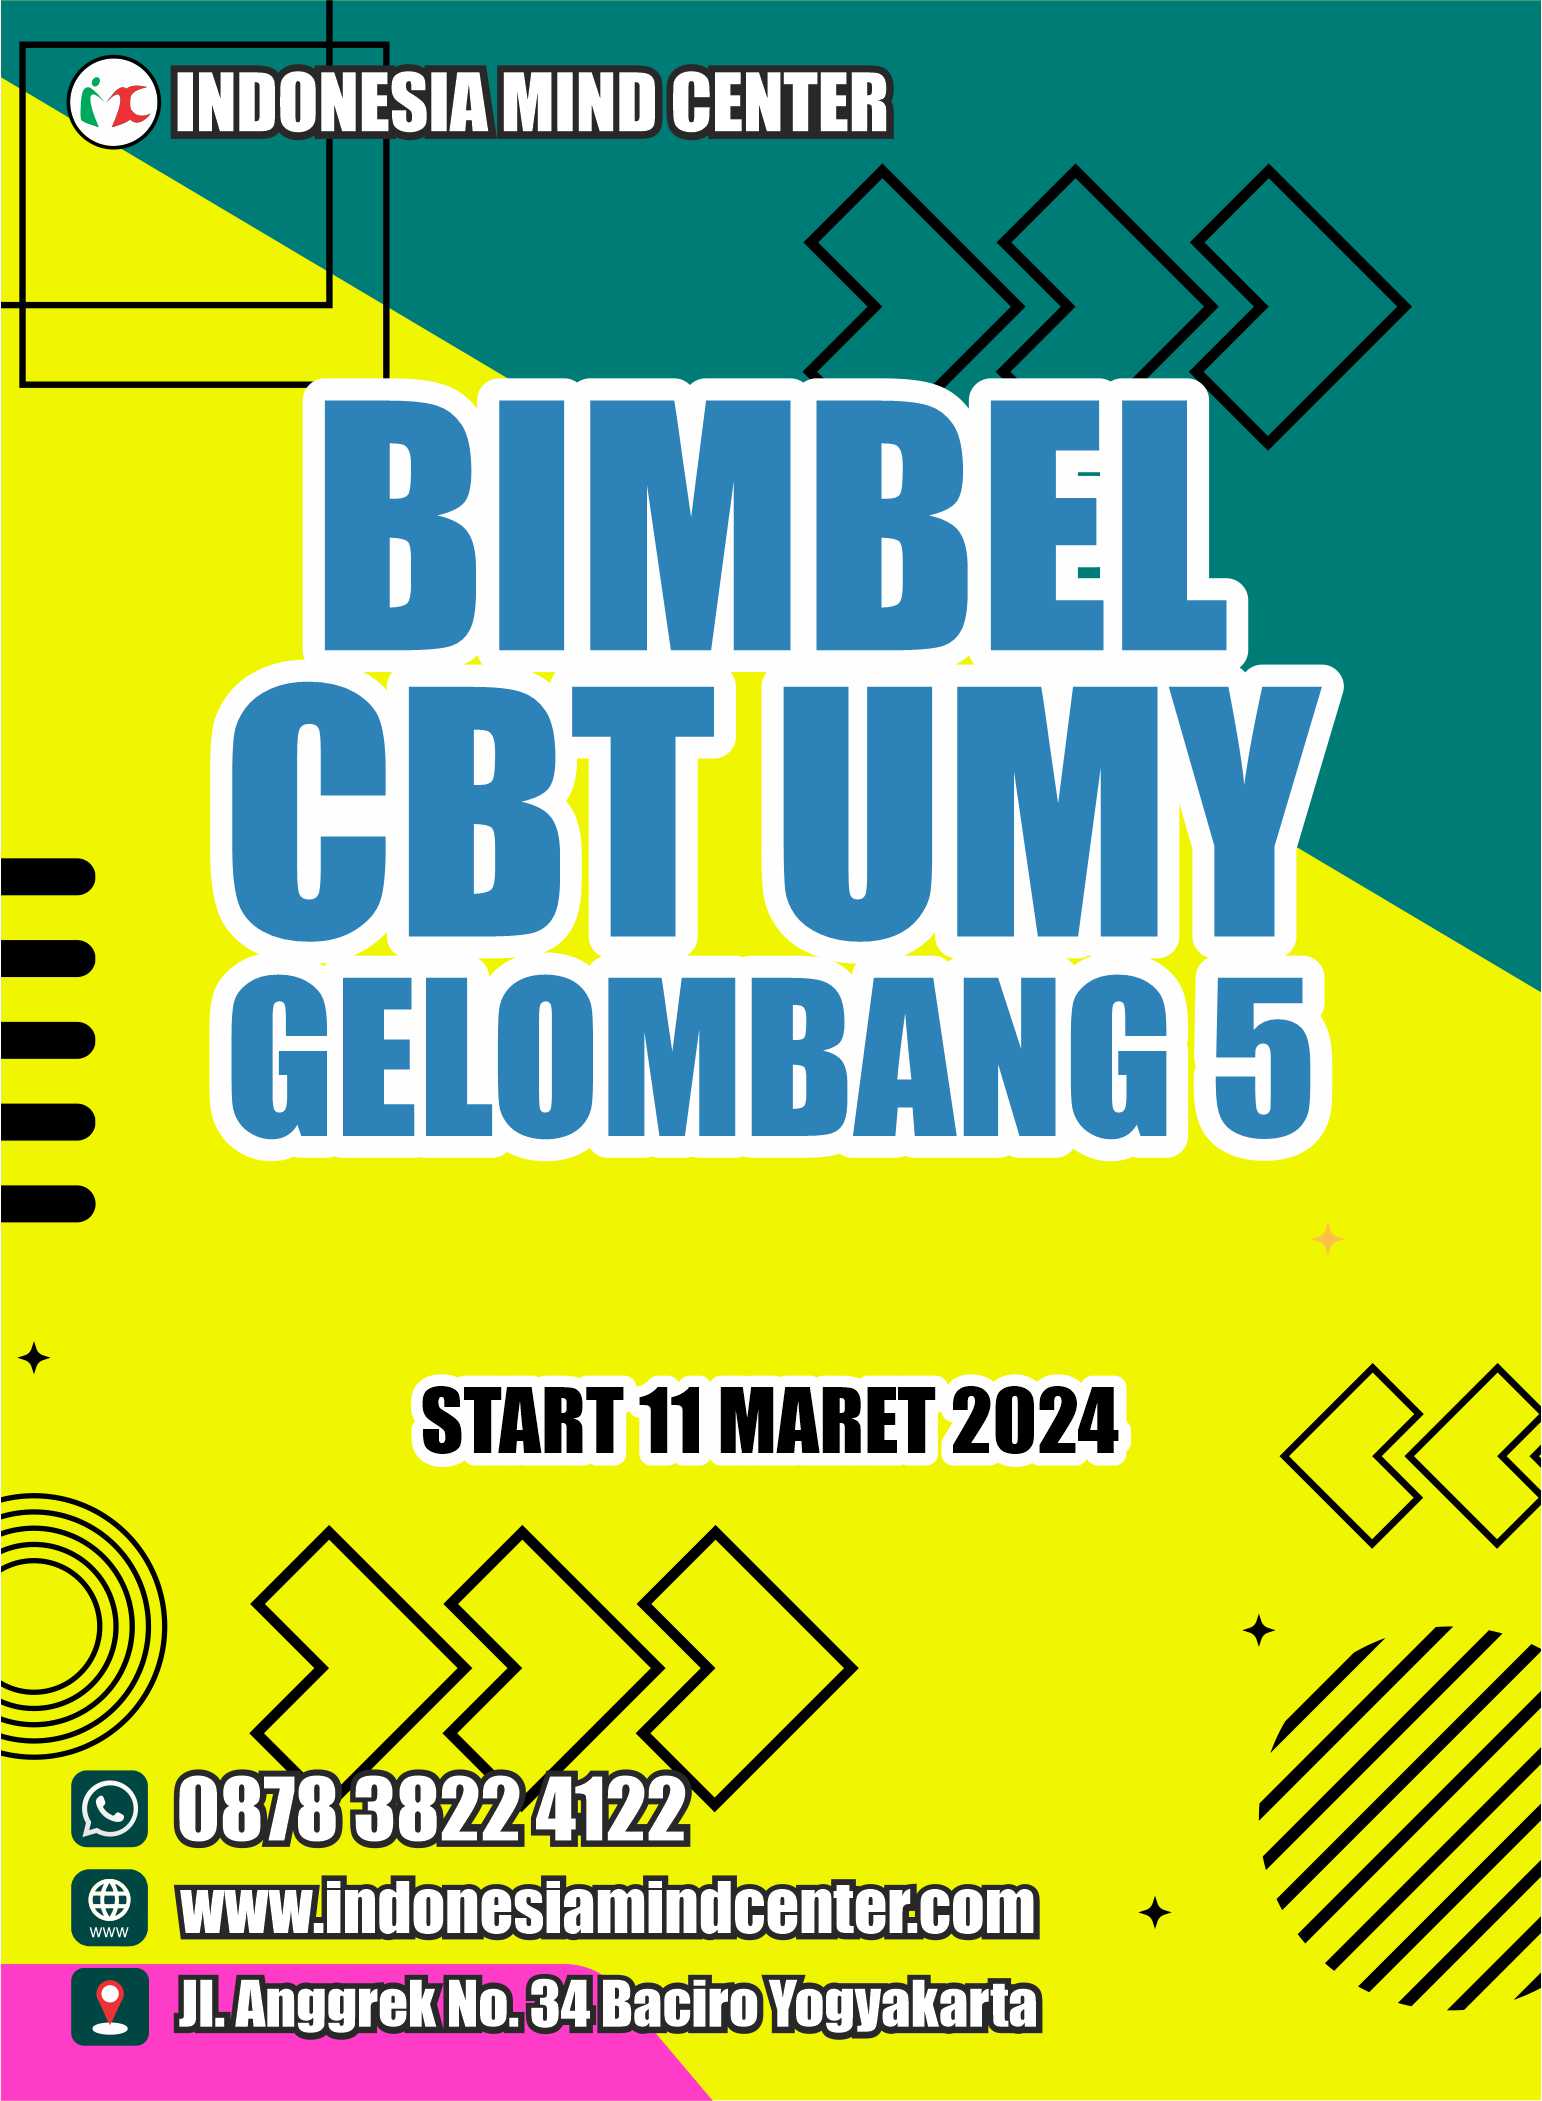 BIMBEL CBT UMY GELOMBANG 5 START 11 MARET 2024